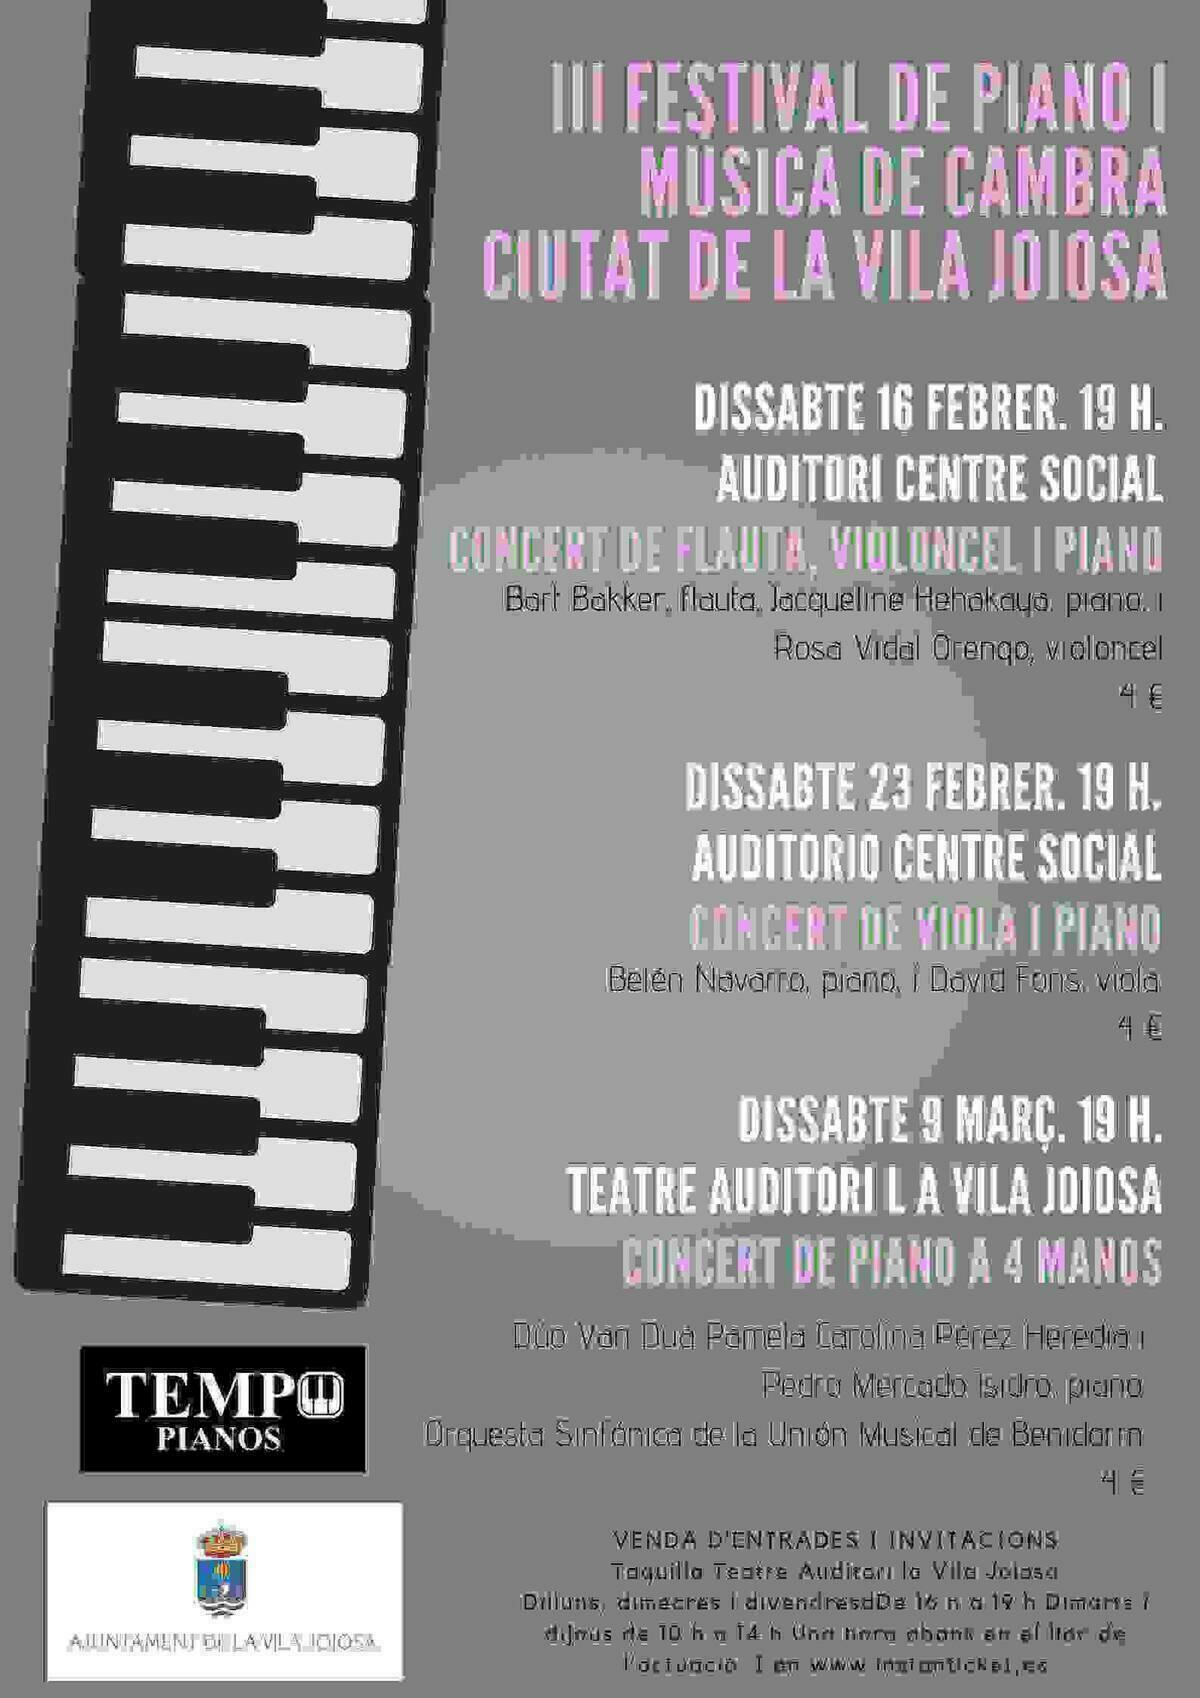 La Vila Joiosa acoge el III Festival de piano y música ‘Ciutat de la Vila Joiosa’